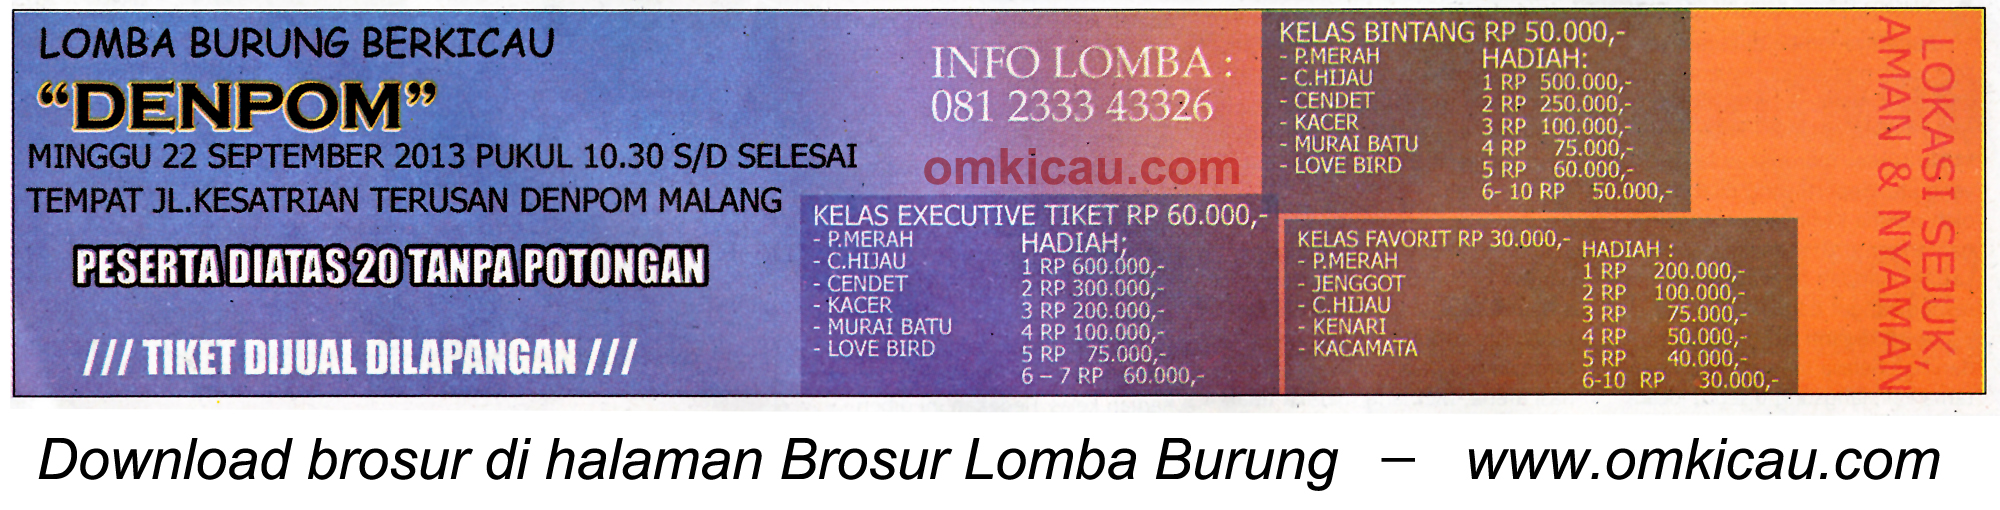 Brosur Lomba Burung Denpom, Malang, 22 September 2013